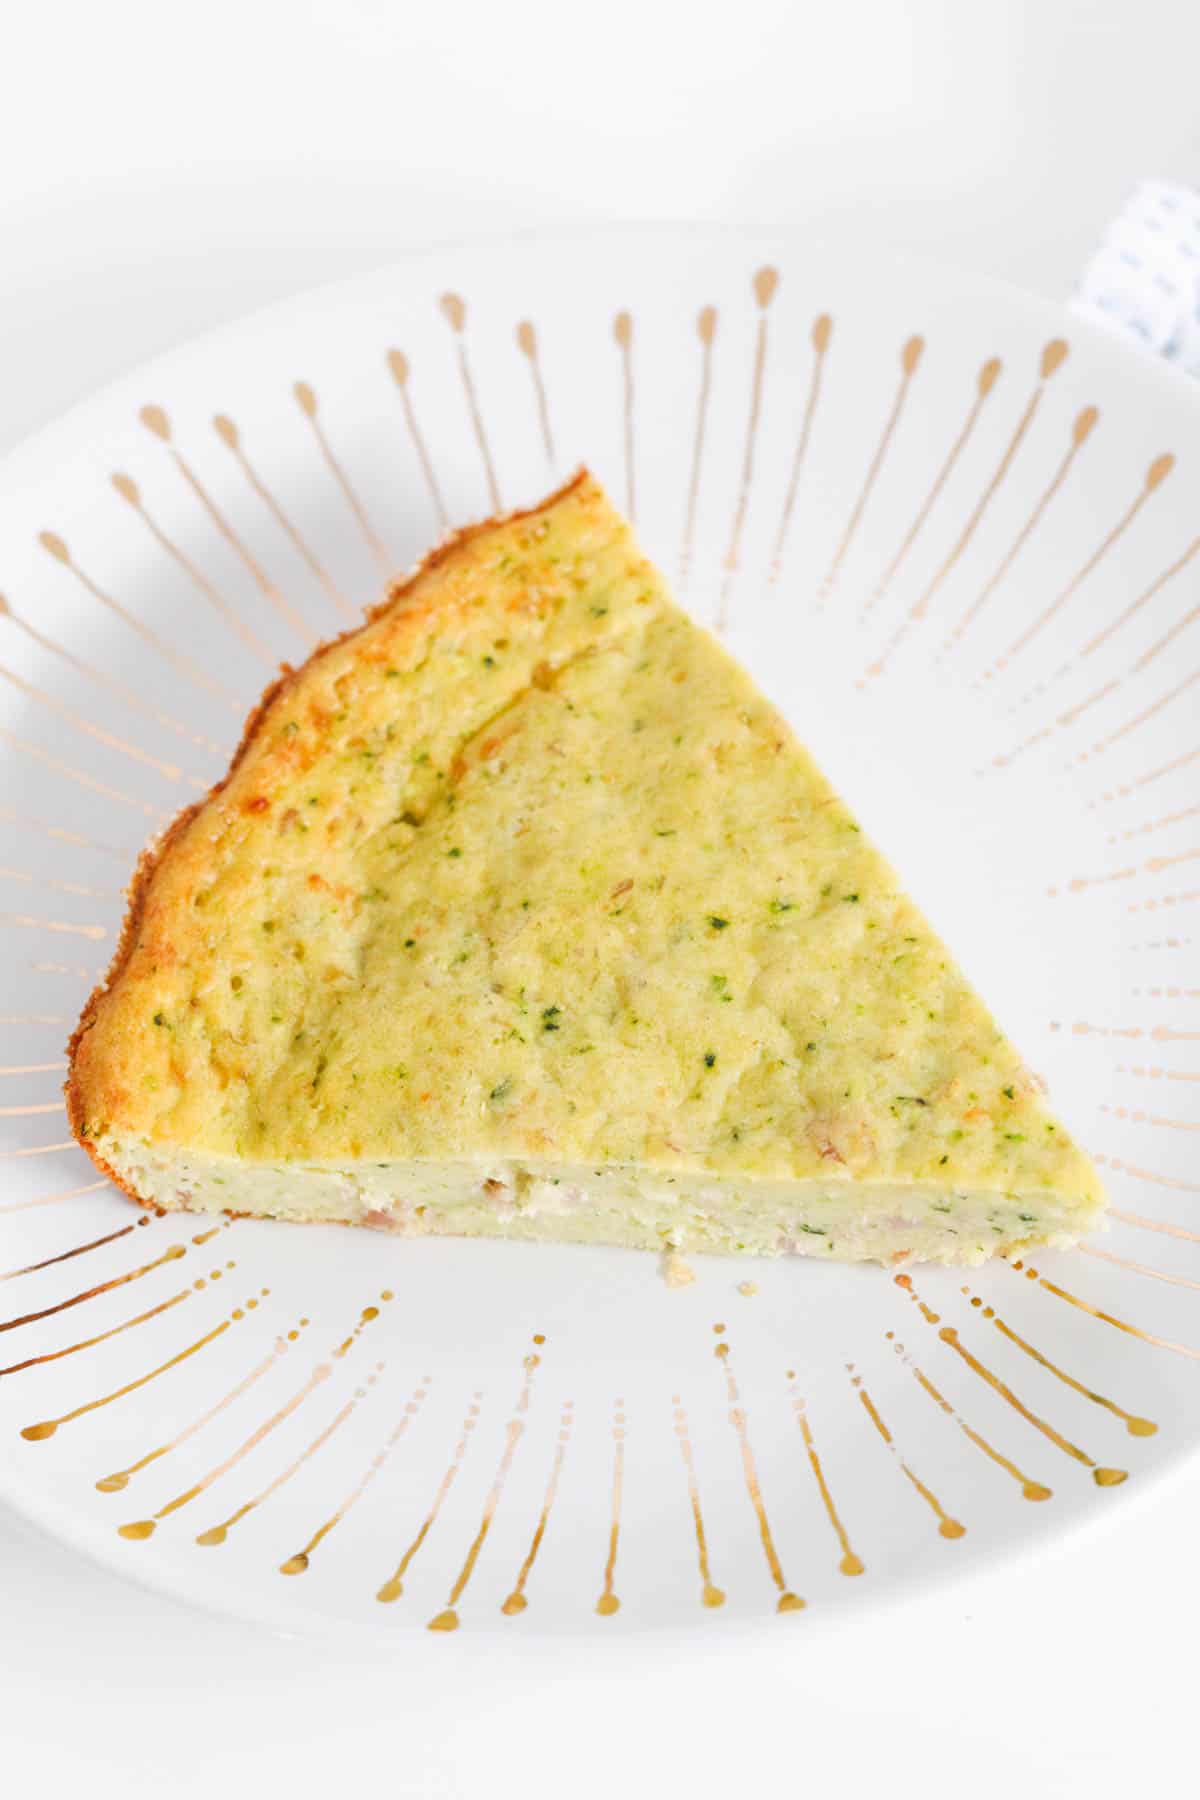 A triangular piece of zucchini slice on a plate.